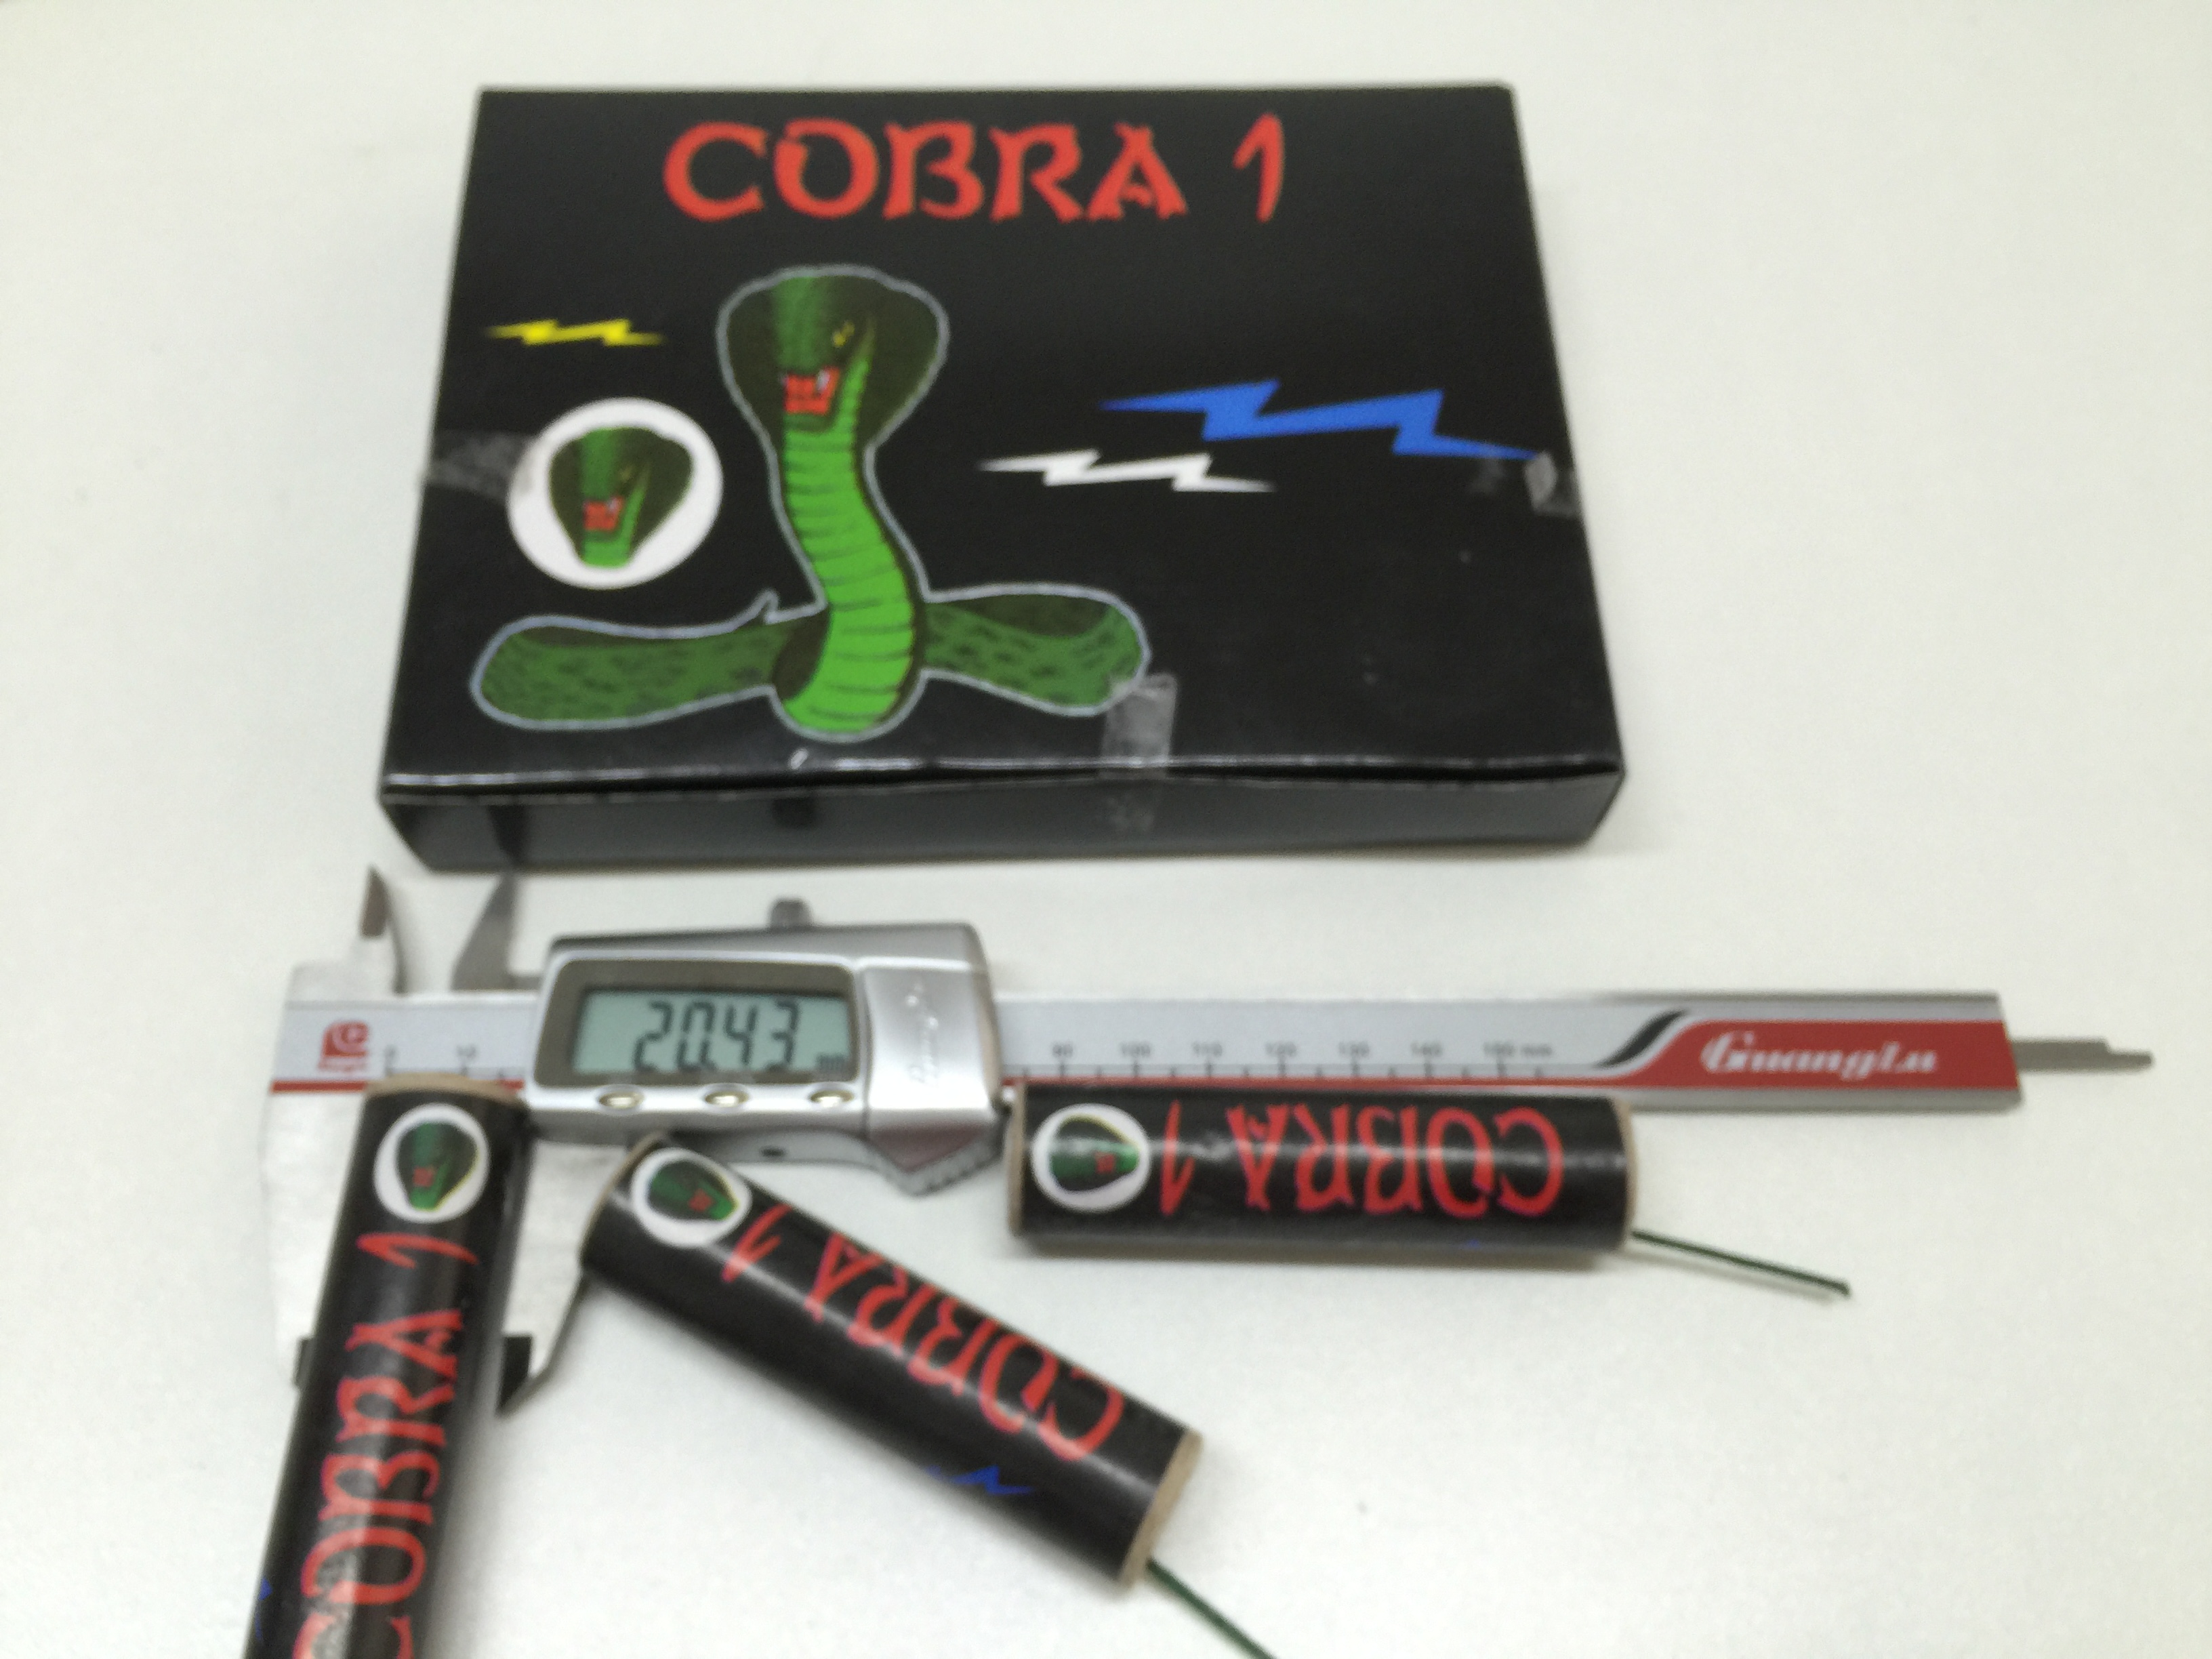 2x COBRA 8 – The Strongest 🧨 Firecracker in the World NEW